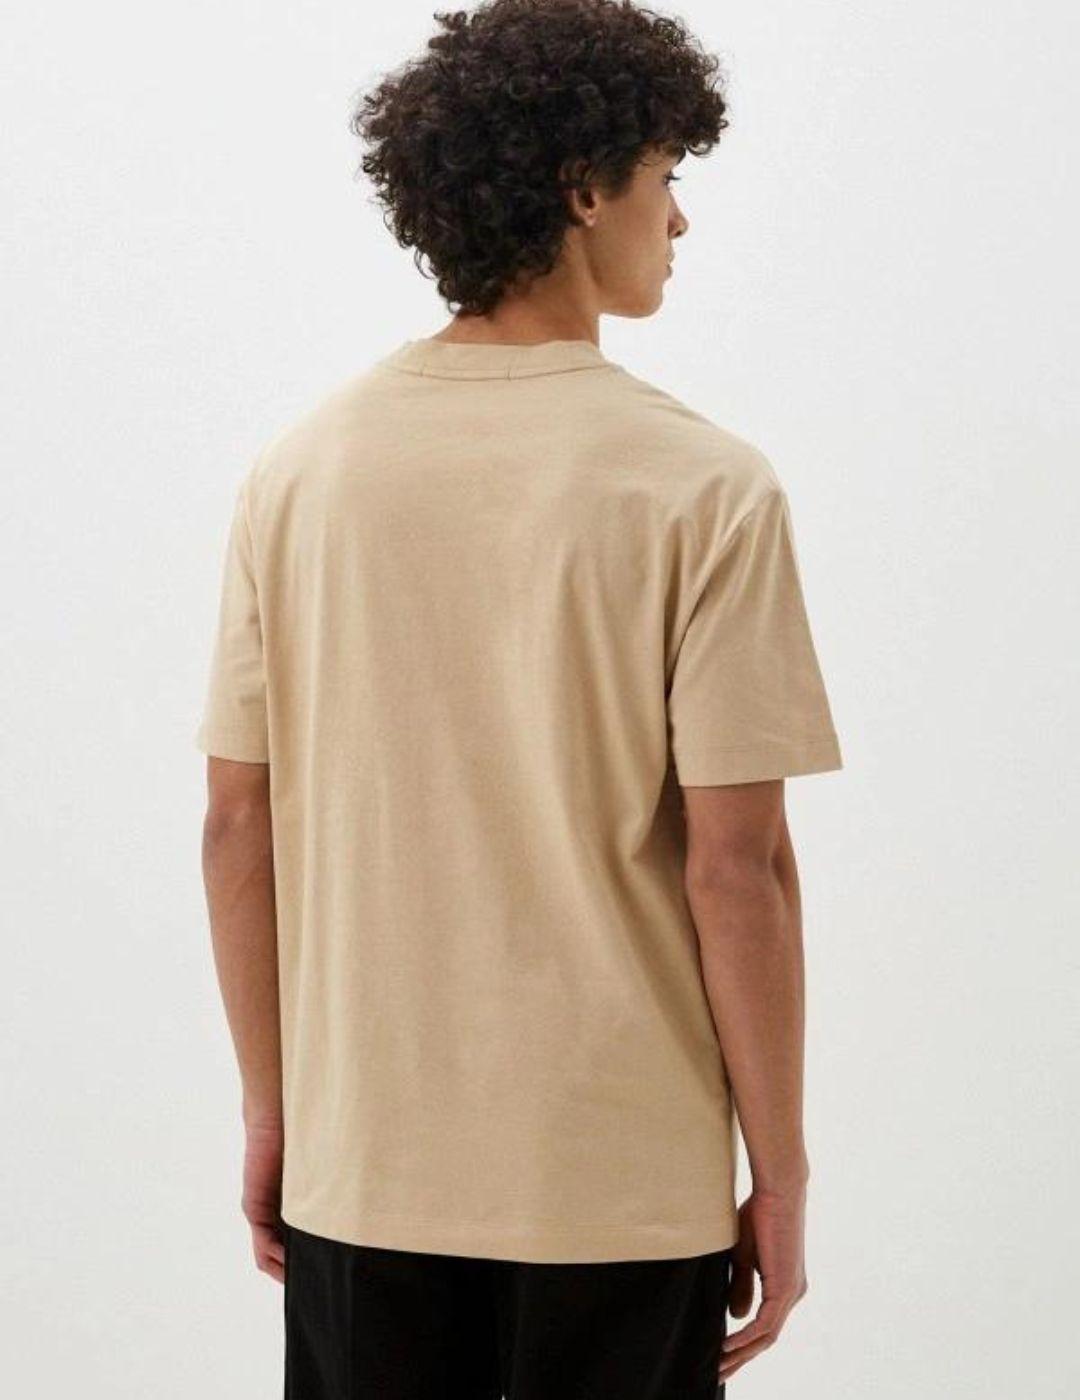 Camiseta beige perforted monologo Calvin Klein